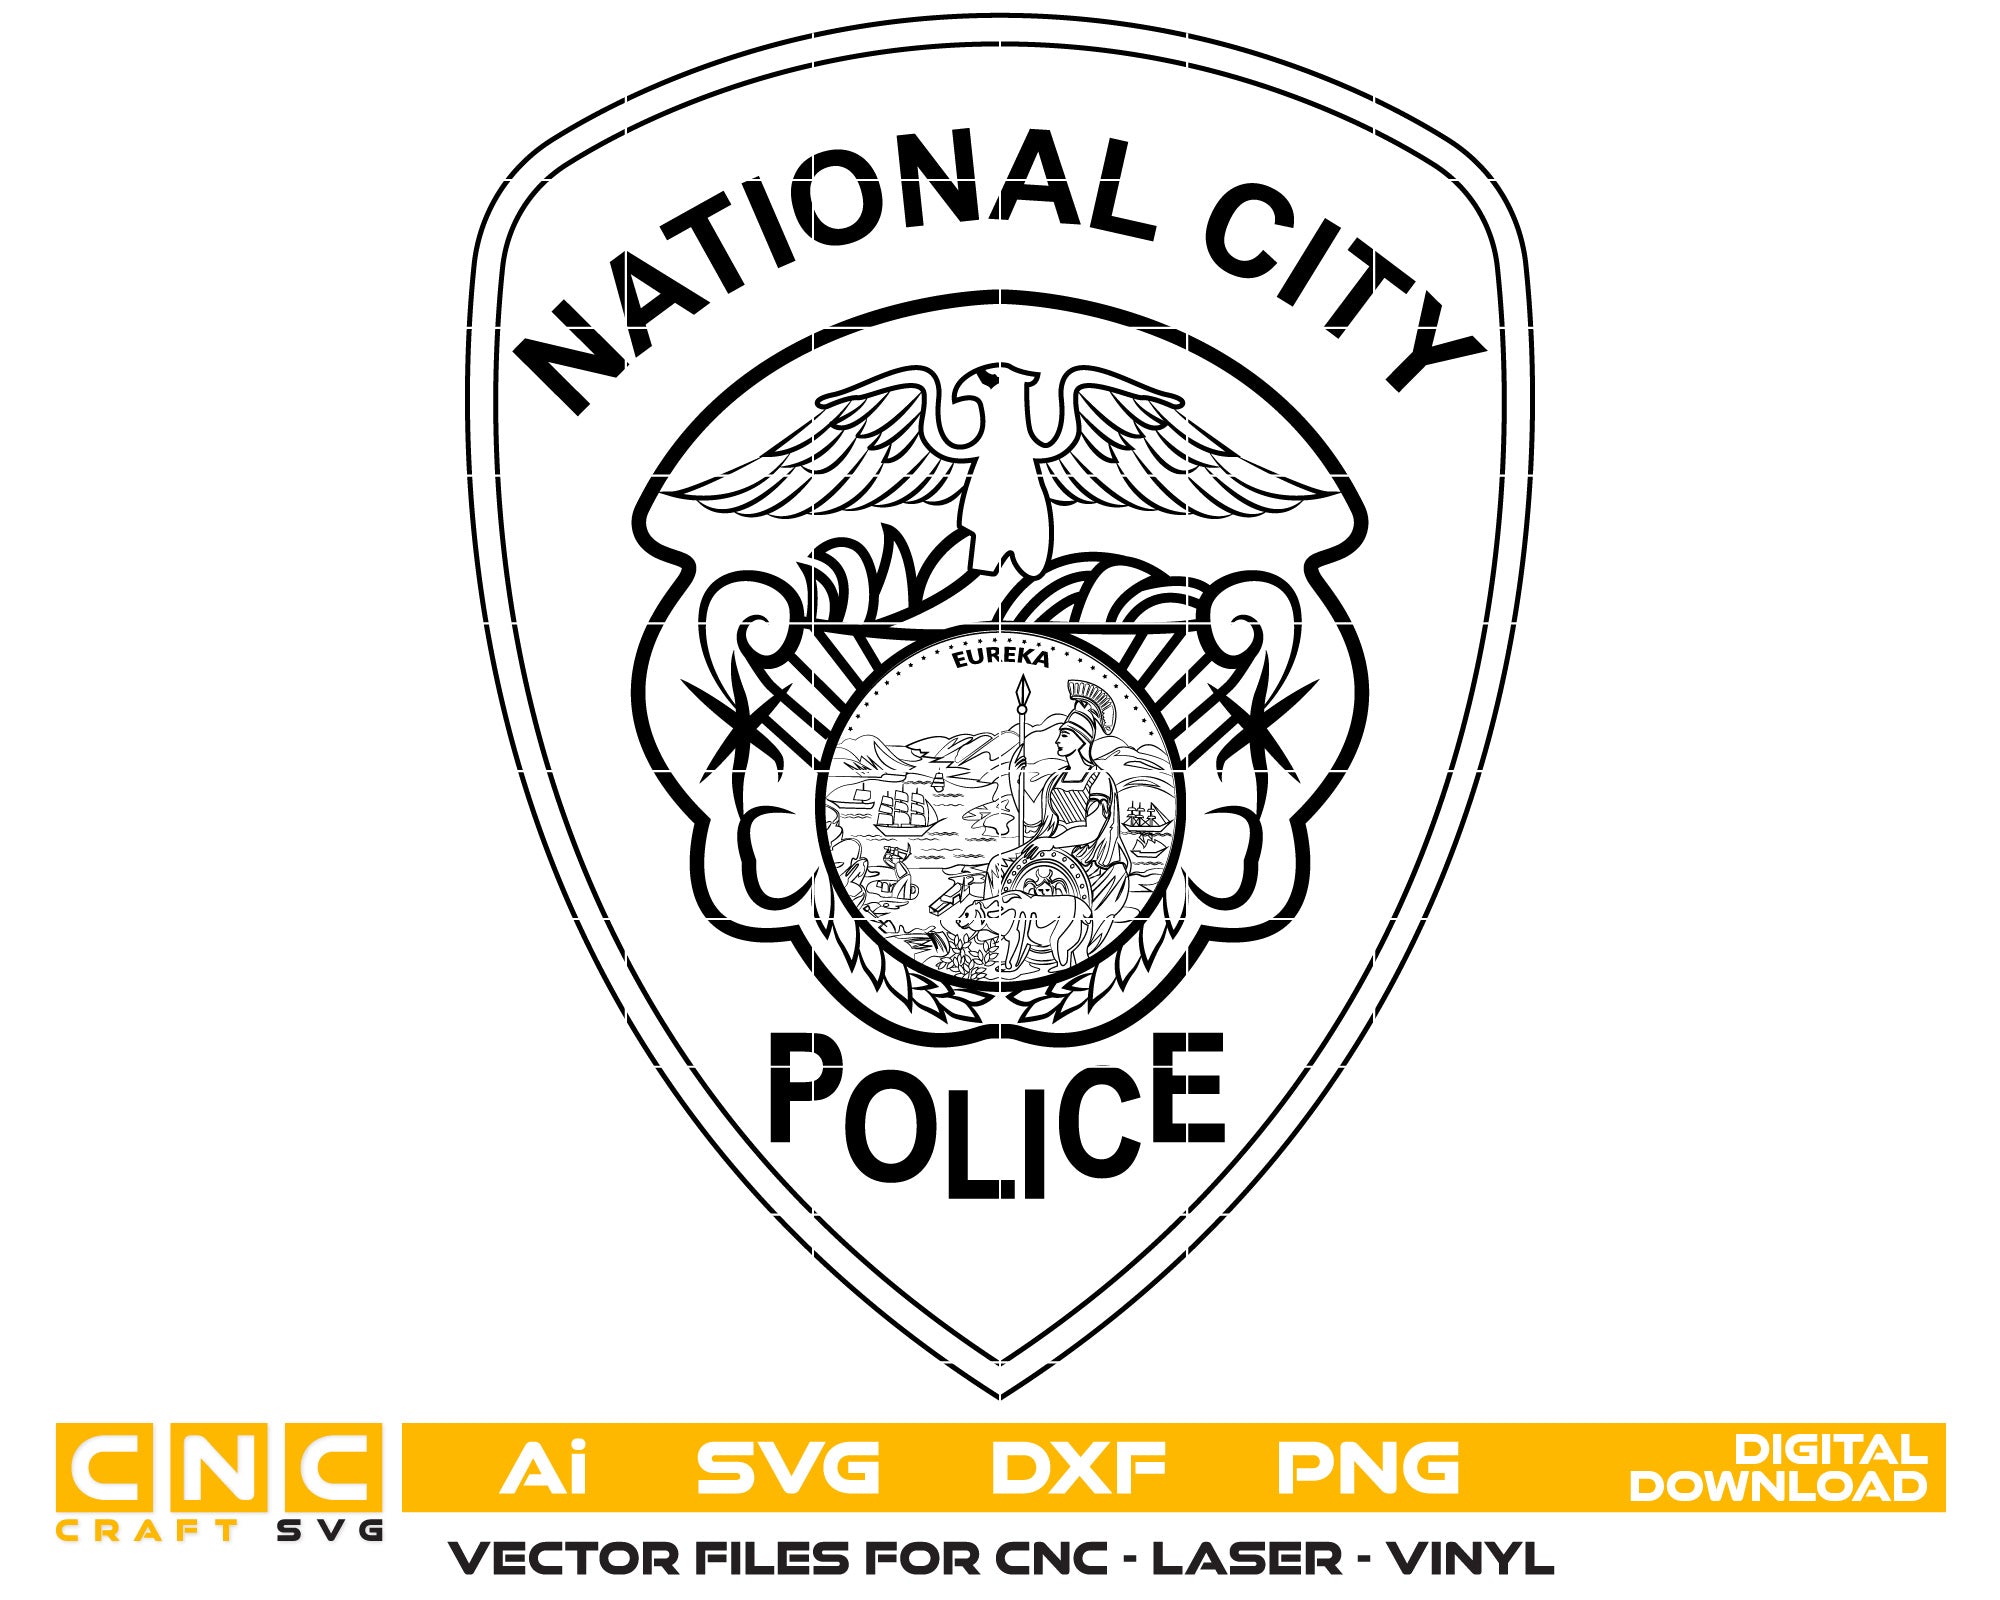 National City Police Logo Vector Art, Ai,SVG, DXF, PNG, Digital Files